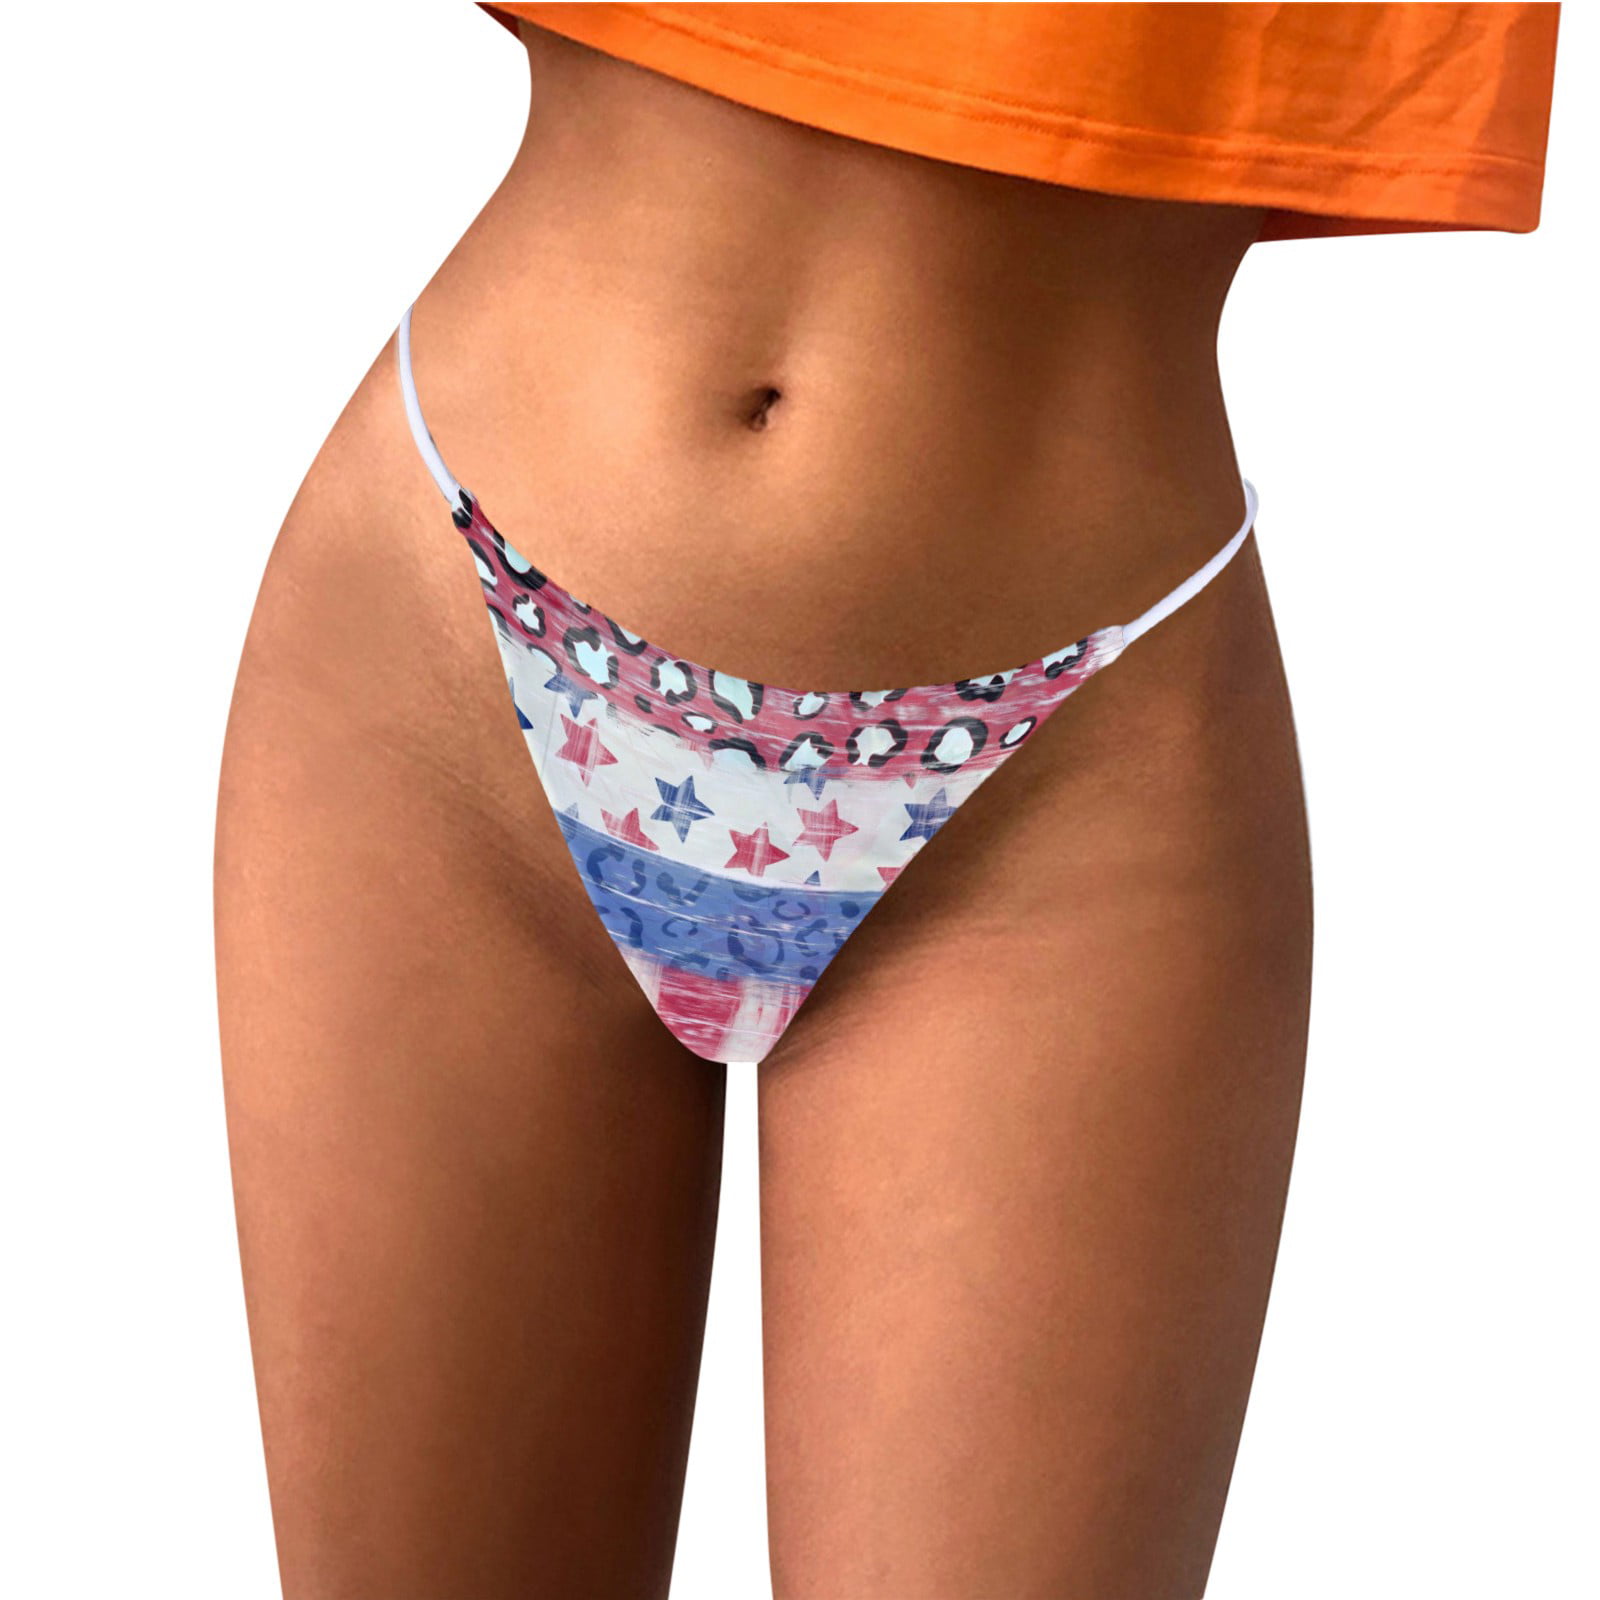 PMUYBHF G String Printed Panties Women's T Back underpants Comfort